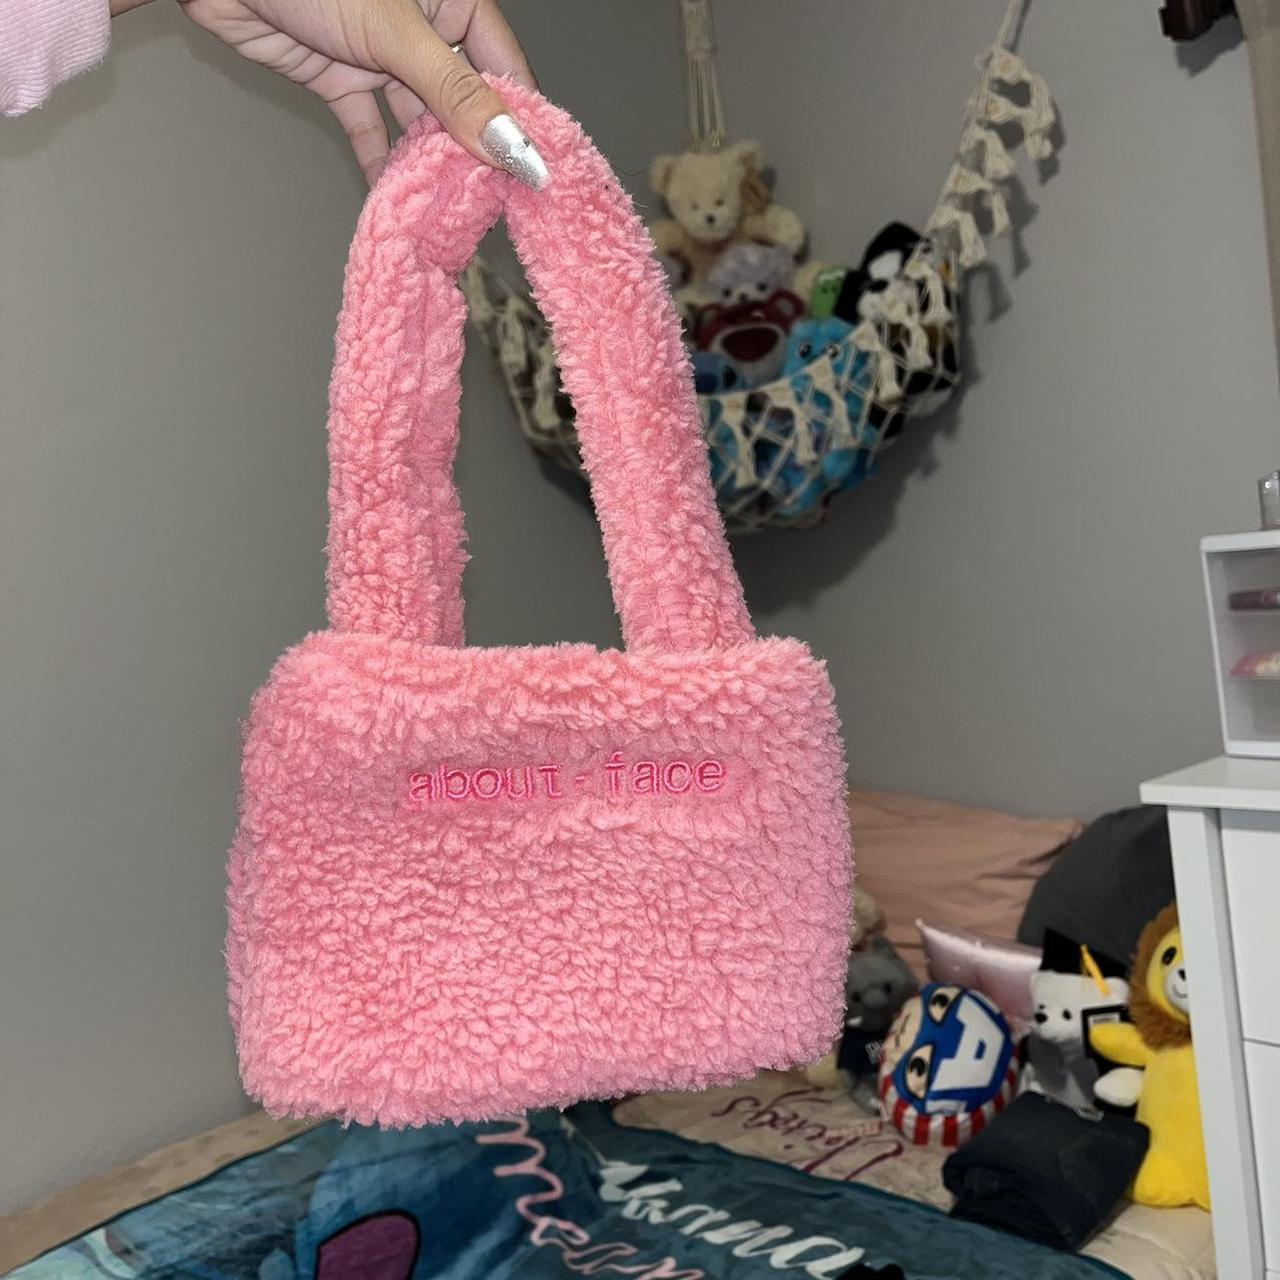 Sephora Women's Bag